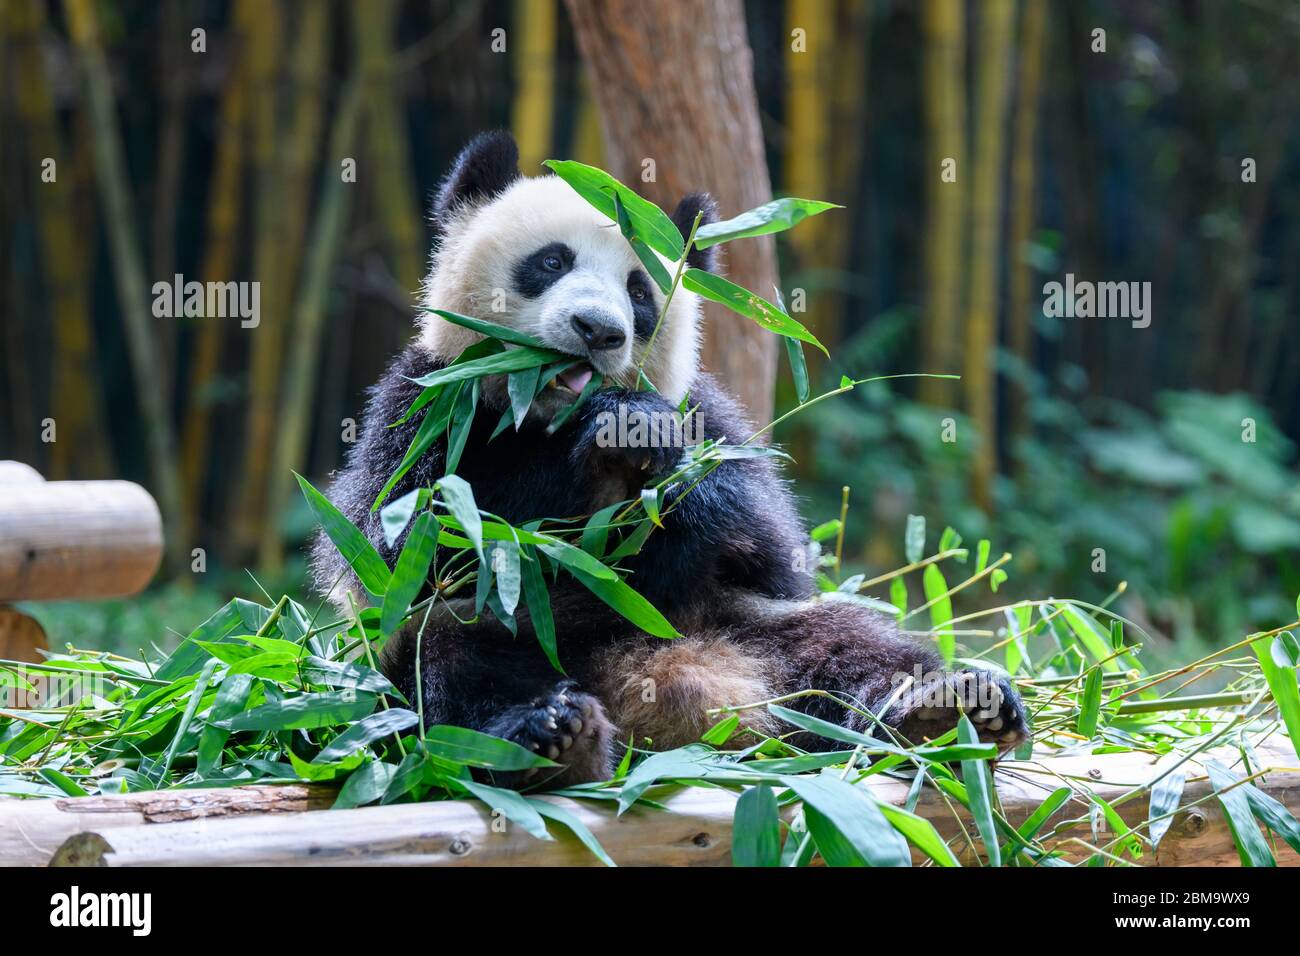 Cute panda sitting and eating bamboo Stock Photo - Alamy